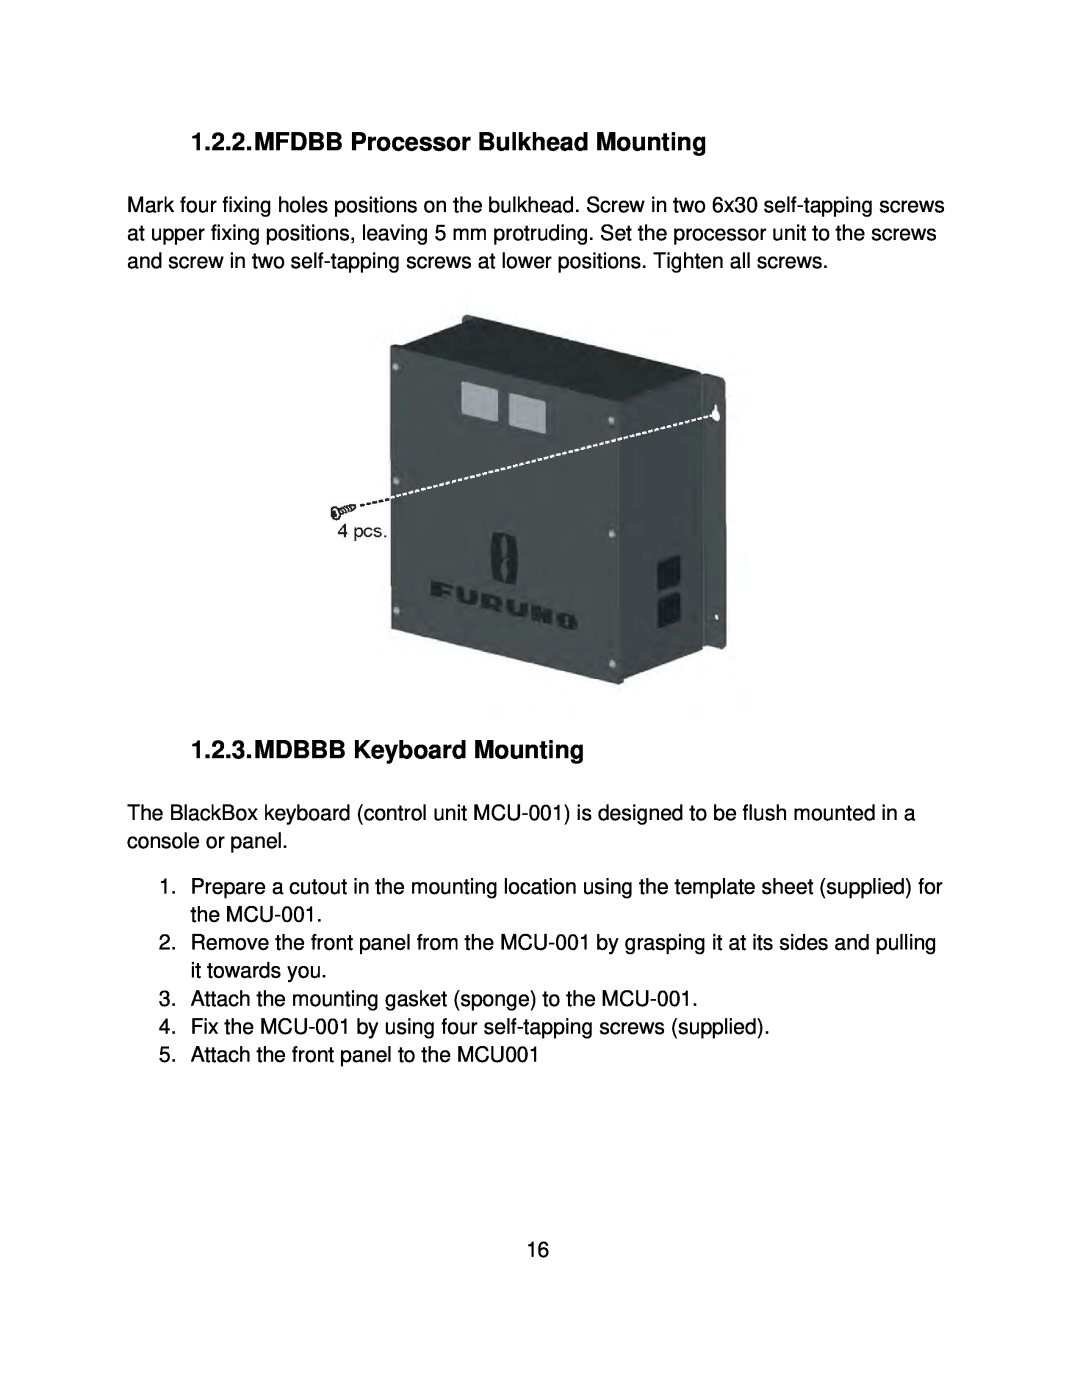 Furuno MFD8/12/BB manual MFDBB Processor Bulkhead Mounting, MDBBB Keyboard Mounting 